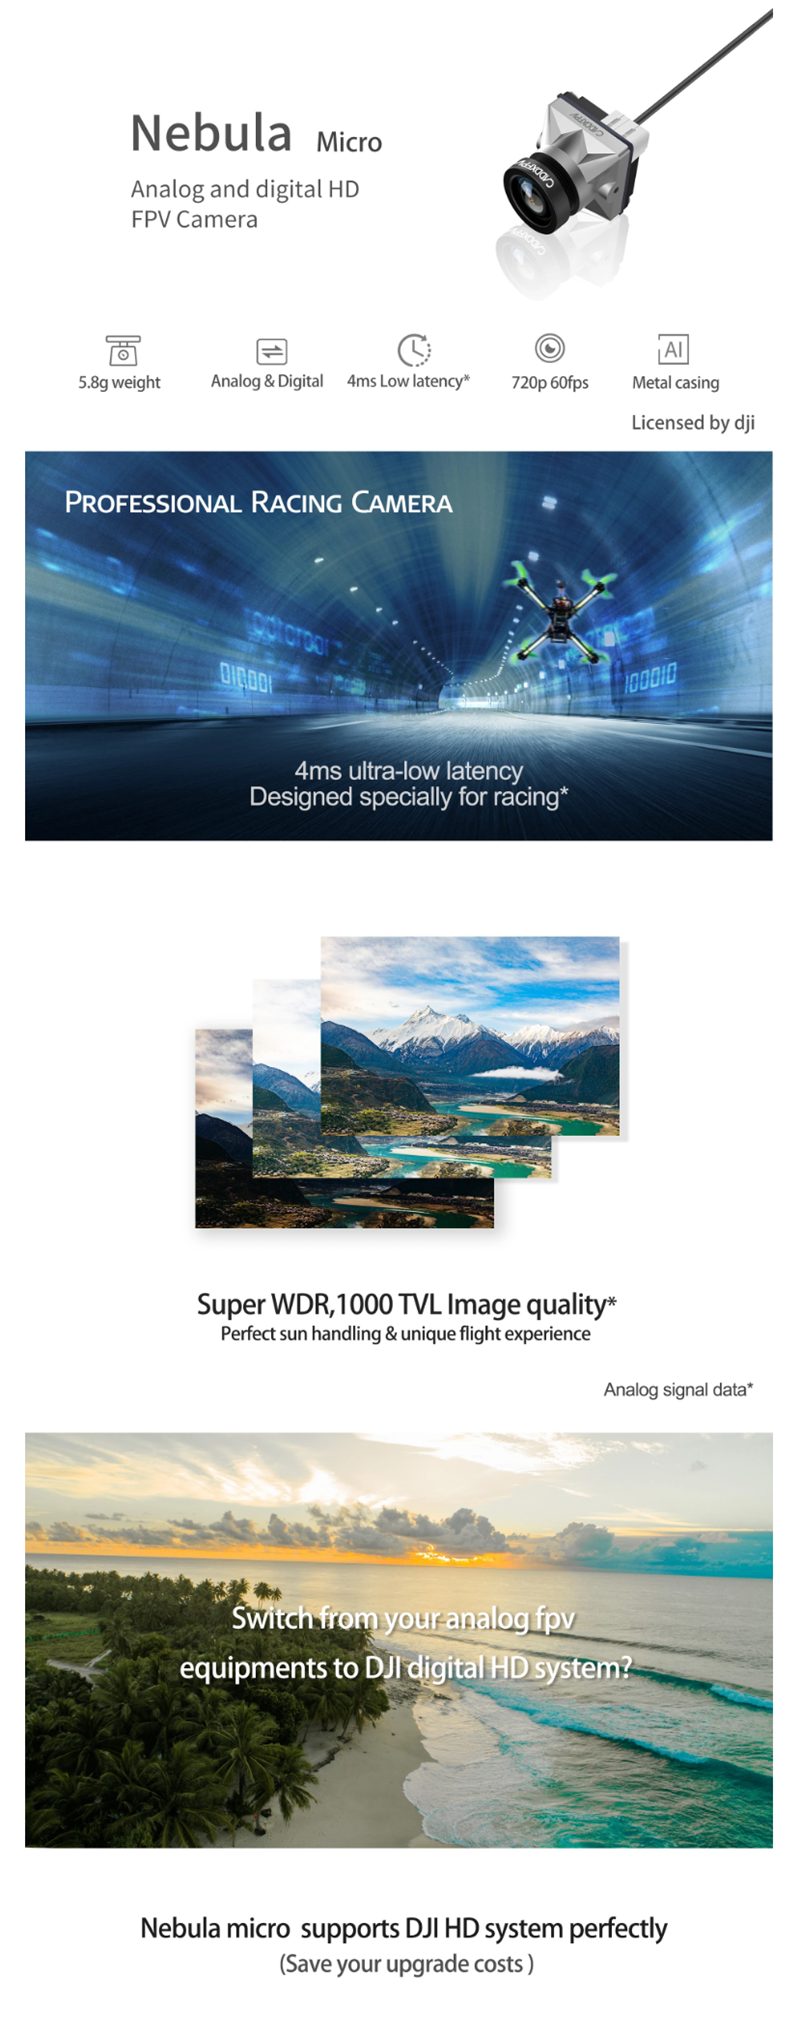 Caddx Nebula Micro 2.1mm 1000TVL 720p/60fps Analog and Digital HD FPV Camera Supports DJI HD System